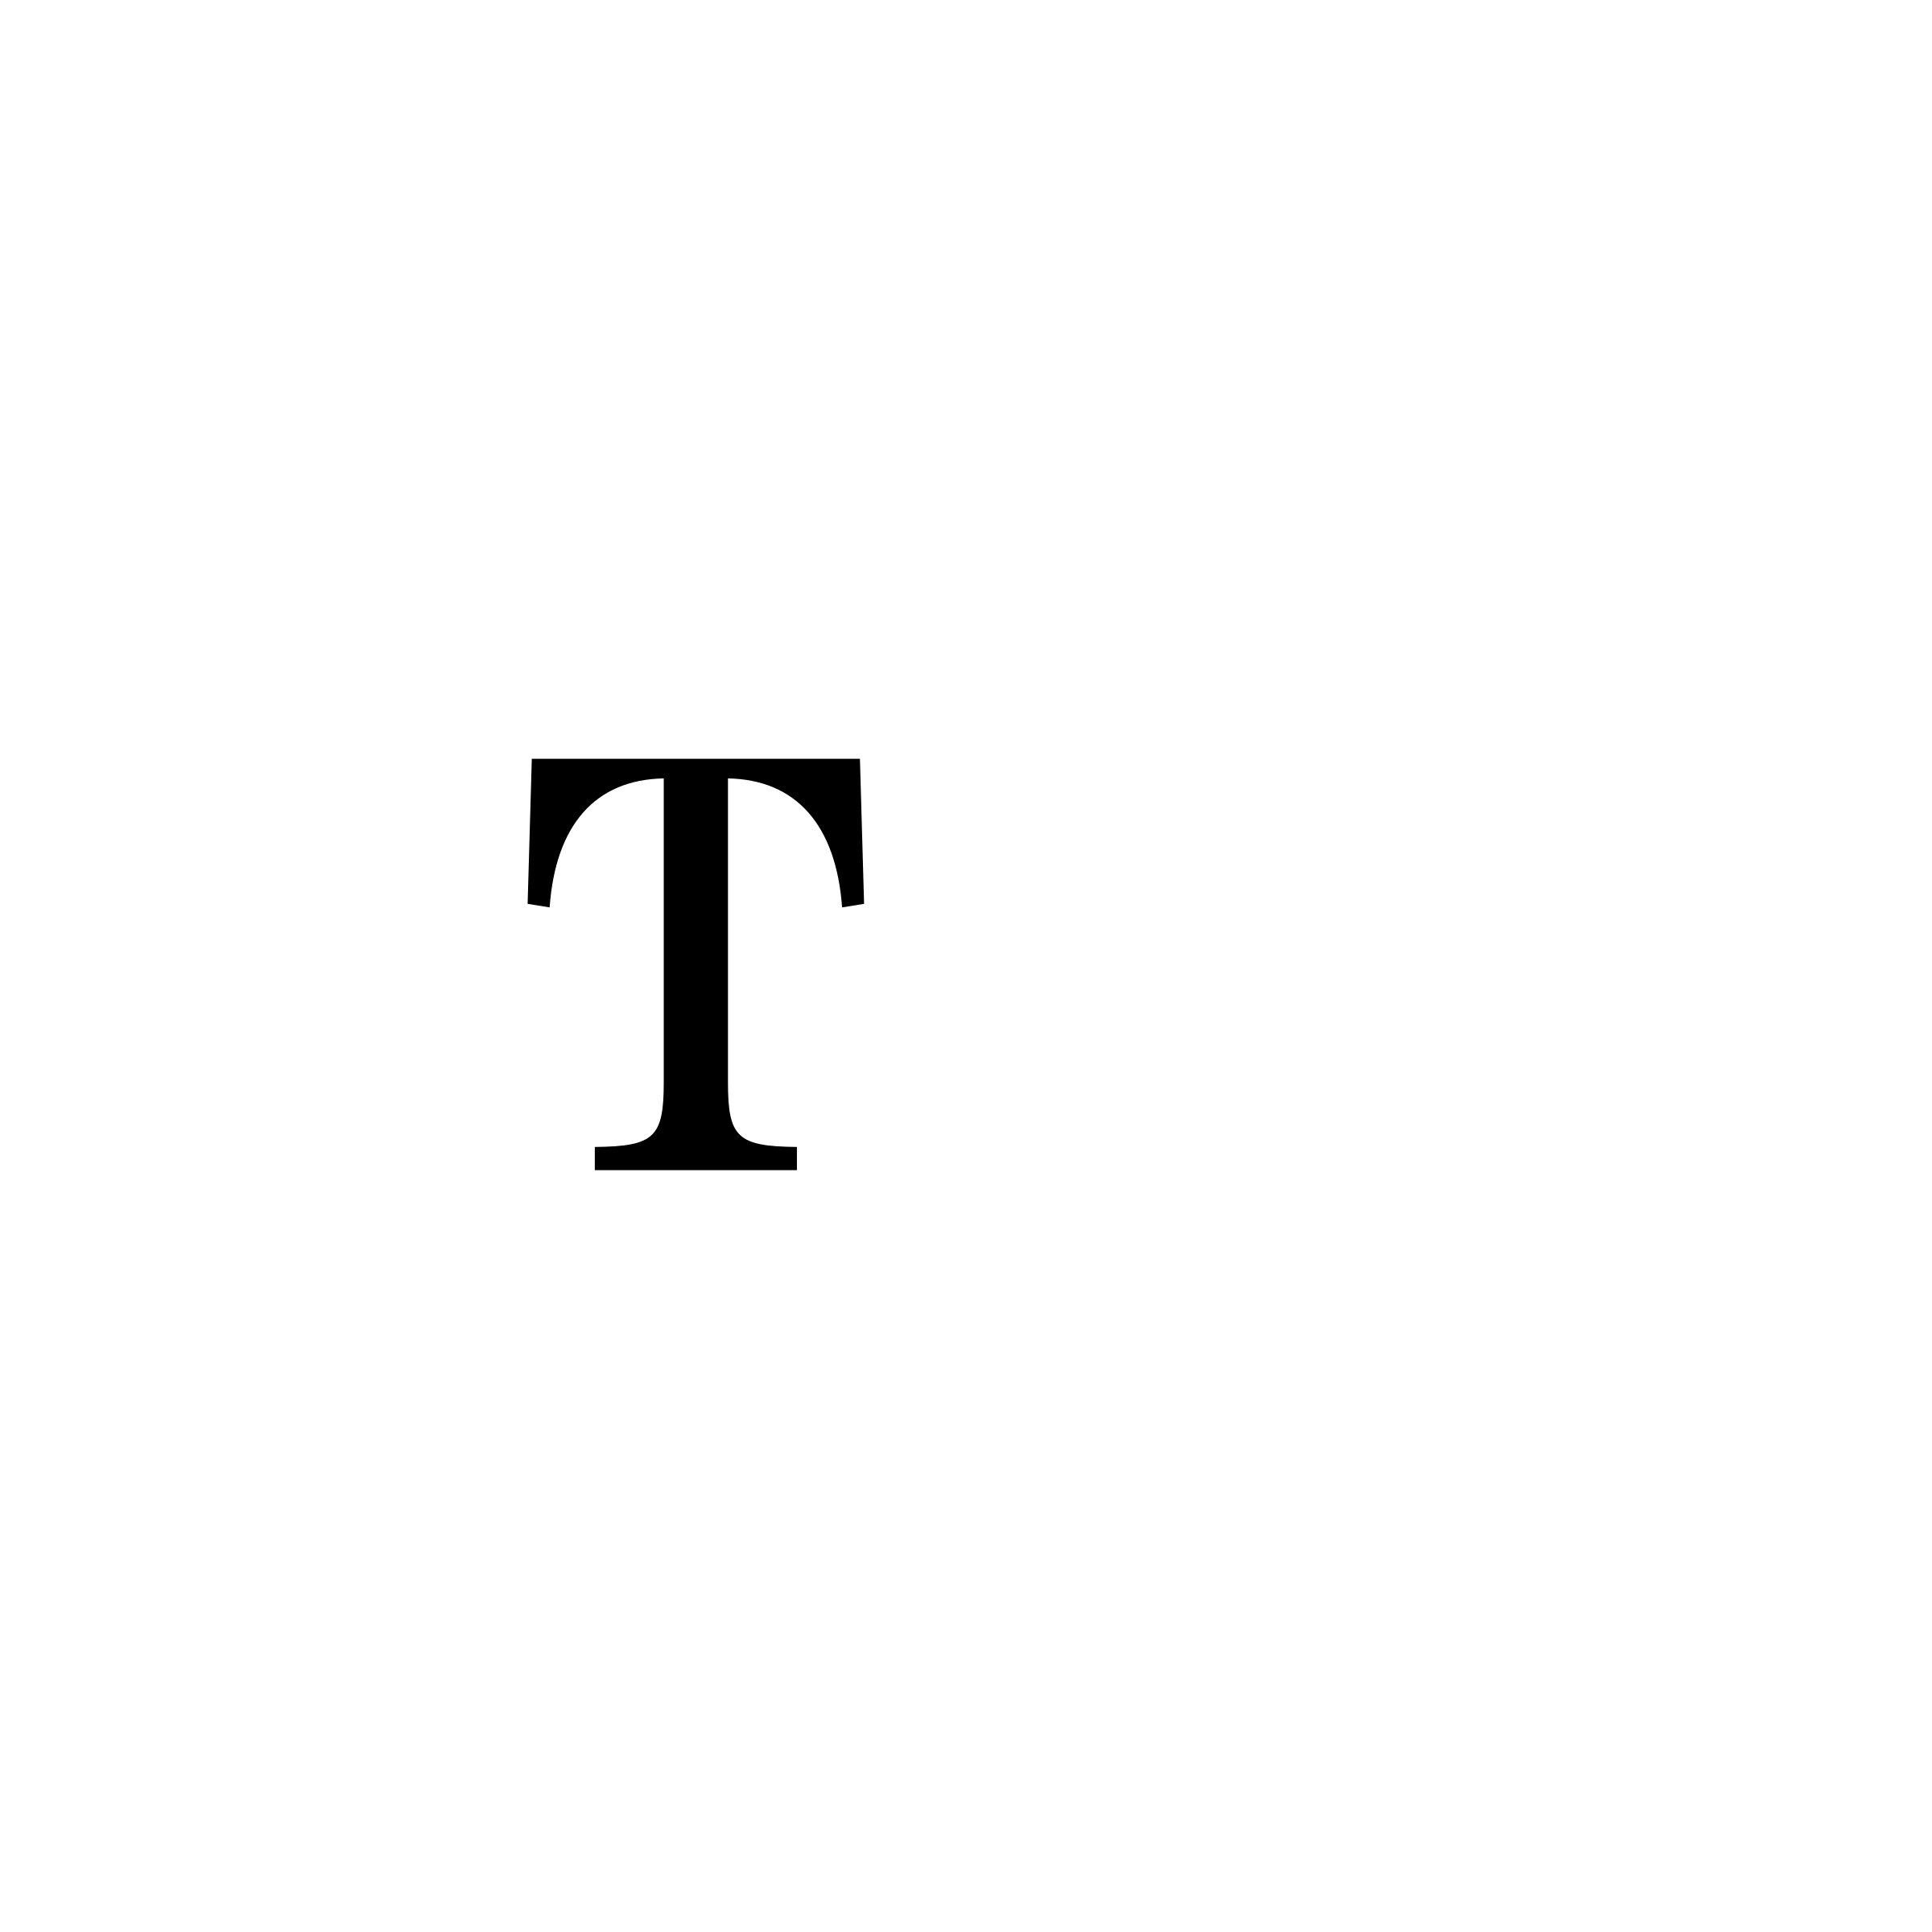 Deutsche Telekom Logo - Deutsche Telekom Logo PNG Transparent & SVG Vector